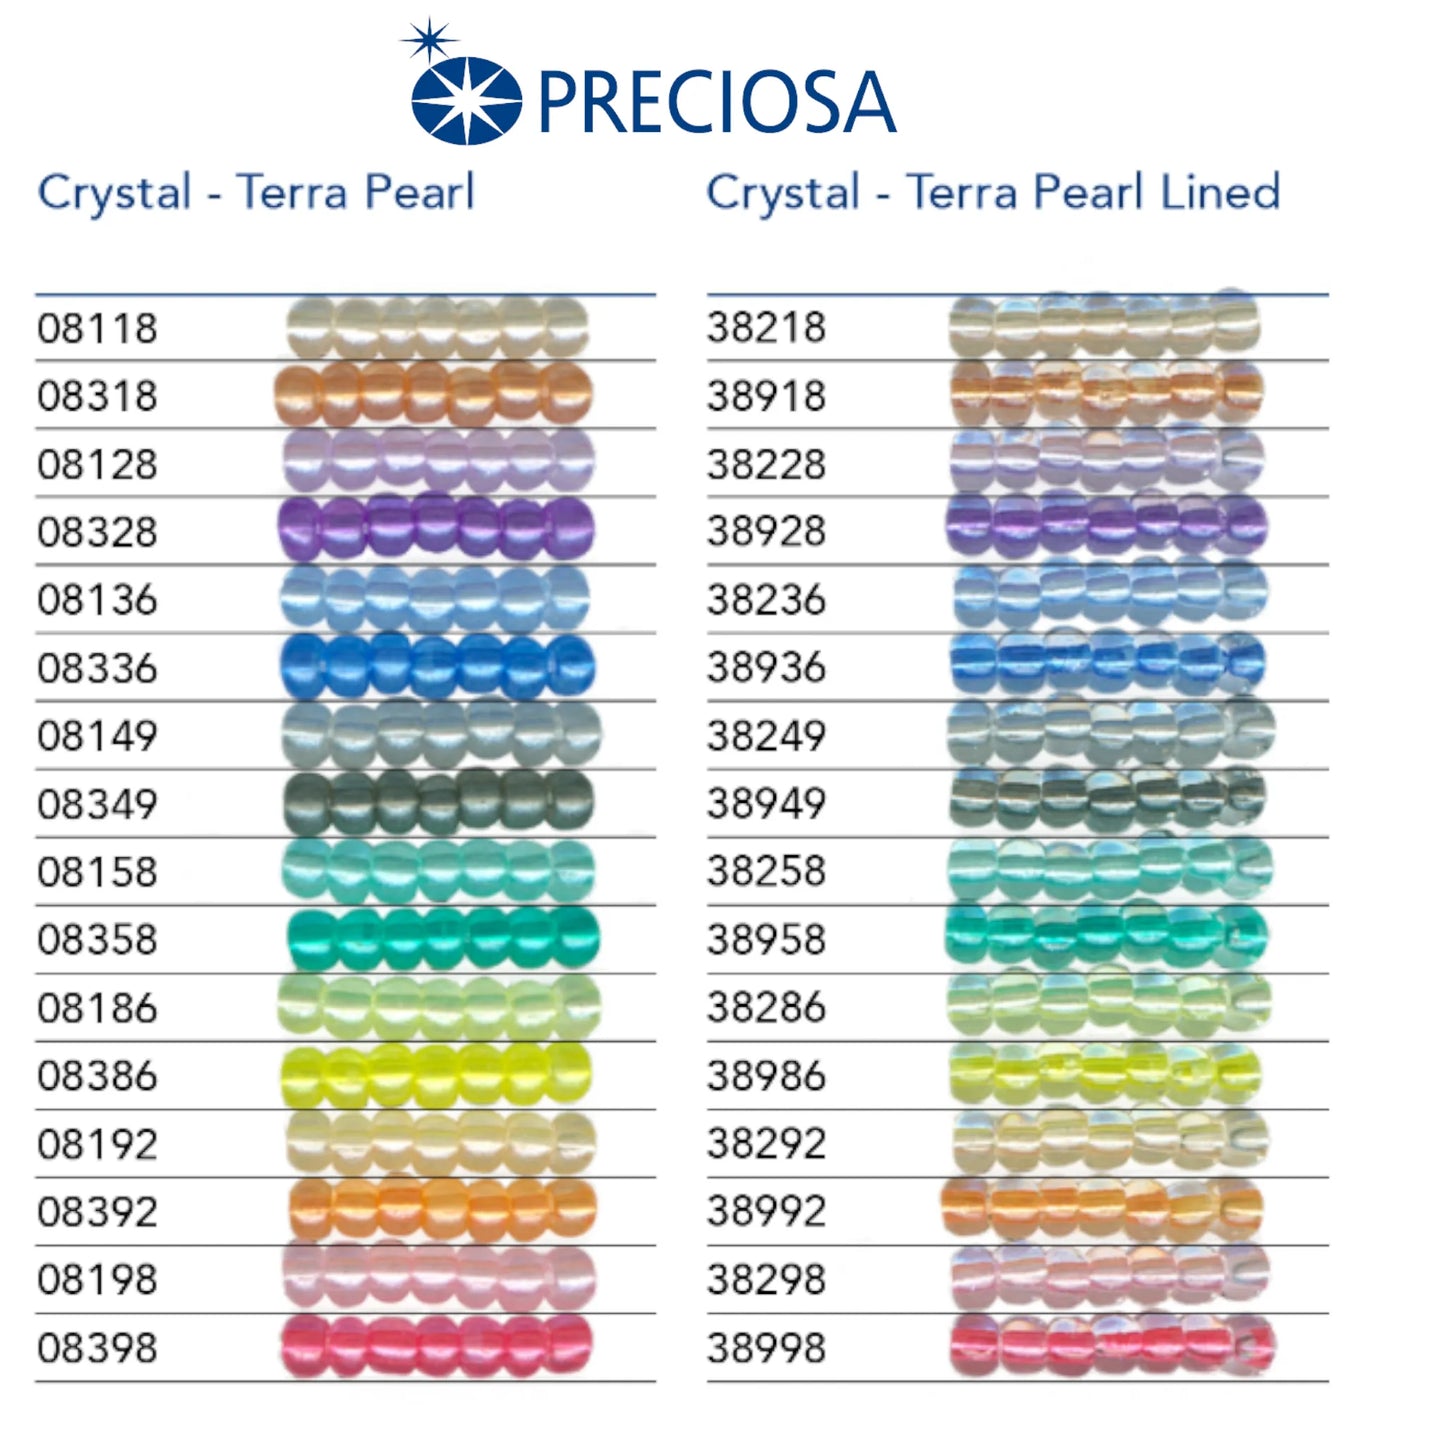 08136 Czech seed beads PRECIOSA Rocailles 10/0 light blue. Crystal - Terra Pearl.